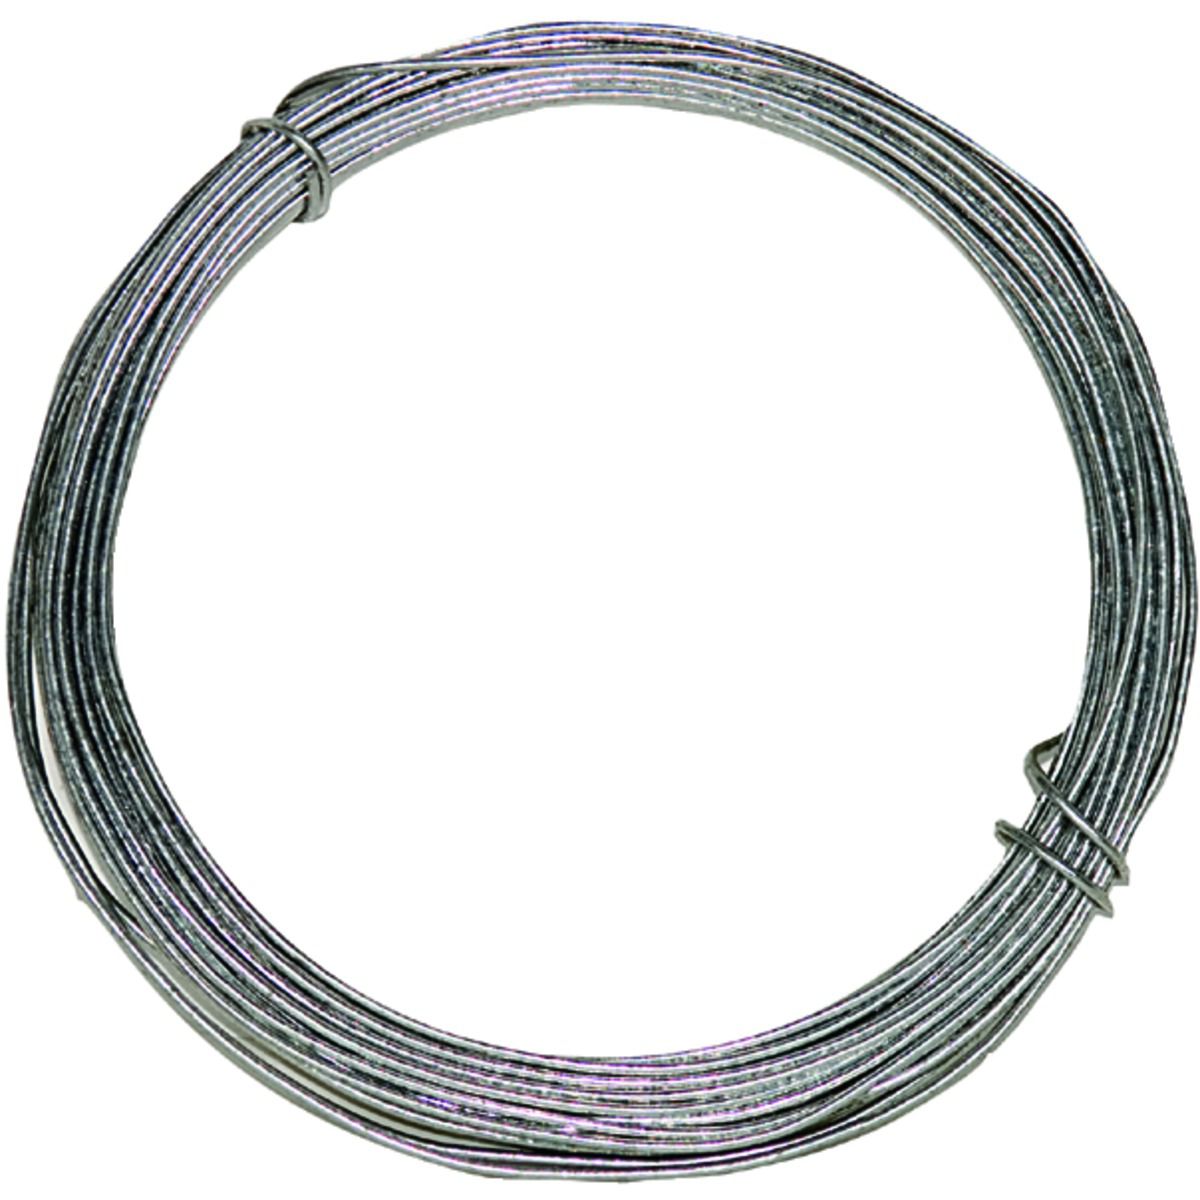 Image of Wickes Galvanised Garden Wire - 2mm x 20m